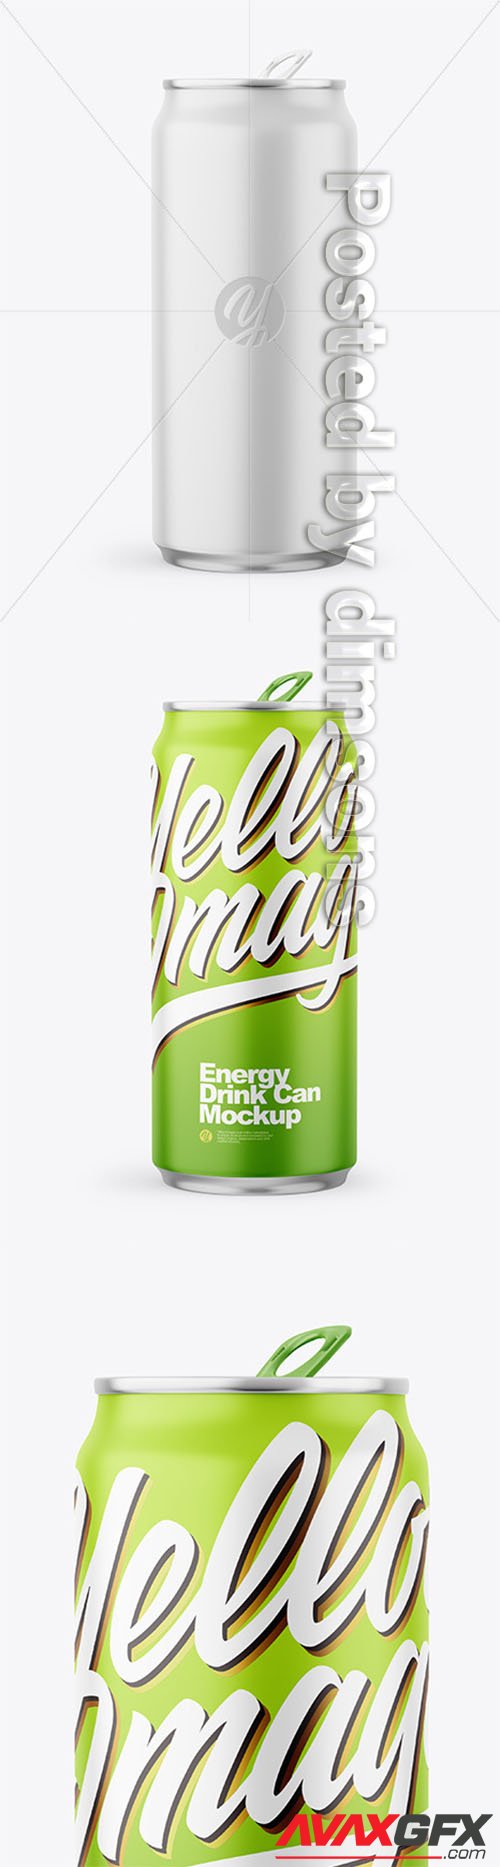 Download Yellowimages Mockups Metallic Drink Can With Glossy Finish Psd Yellowimages Mockups